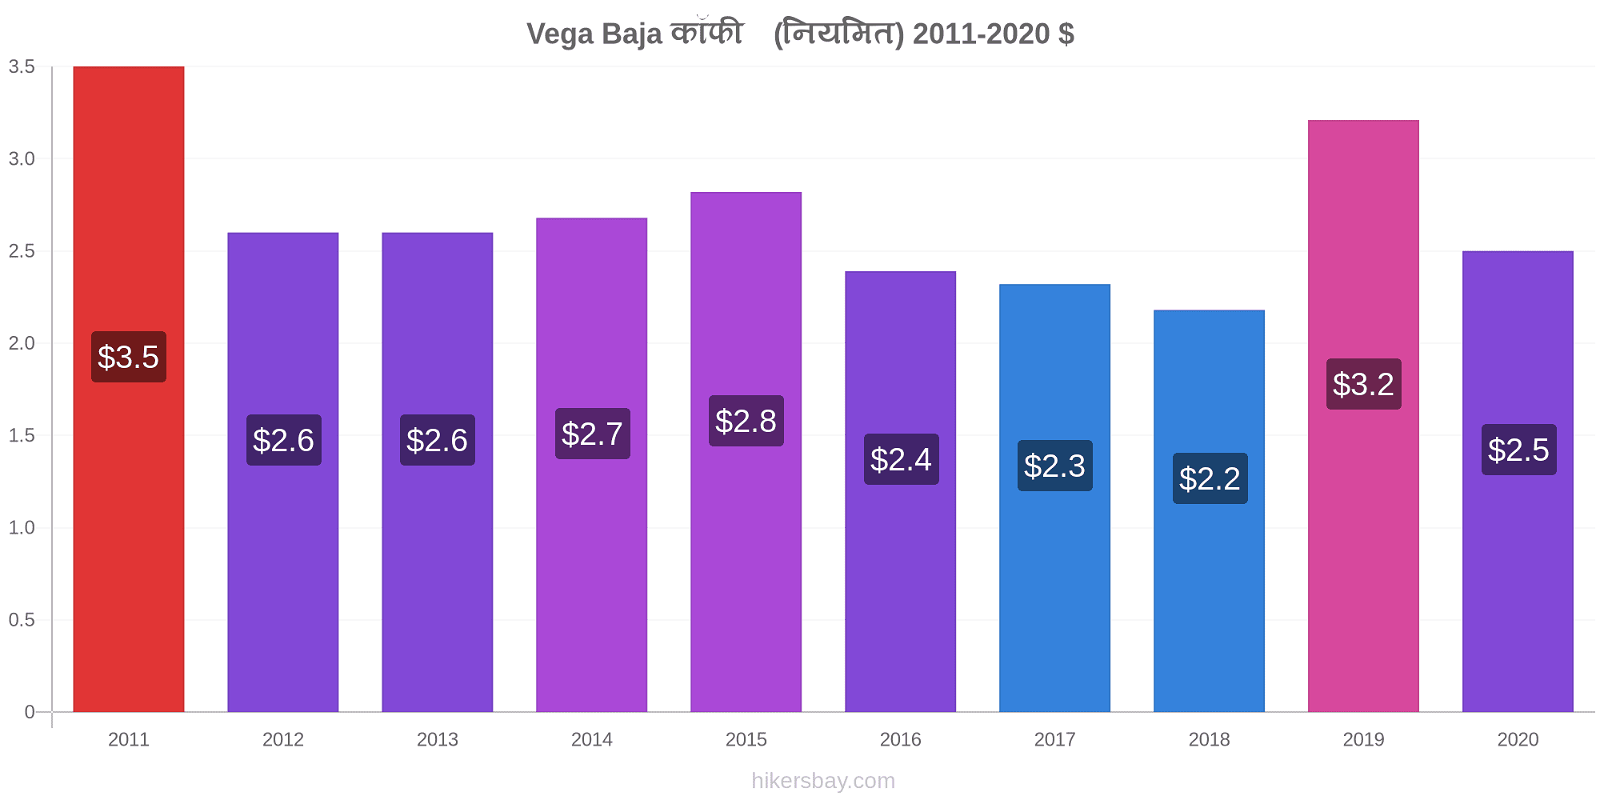 Vega Baja मूल्य परिवर्तन कॉफी (नियमित) hikersbay.com